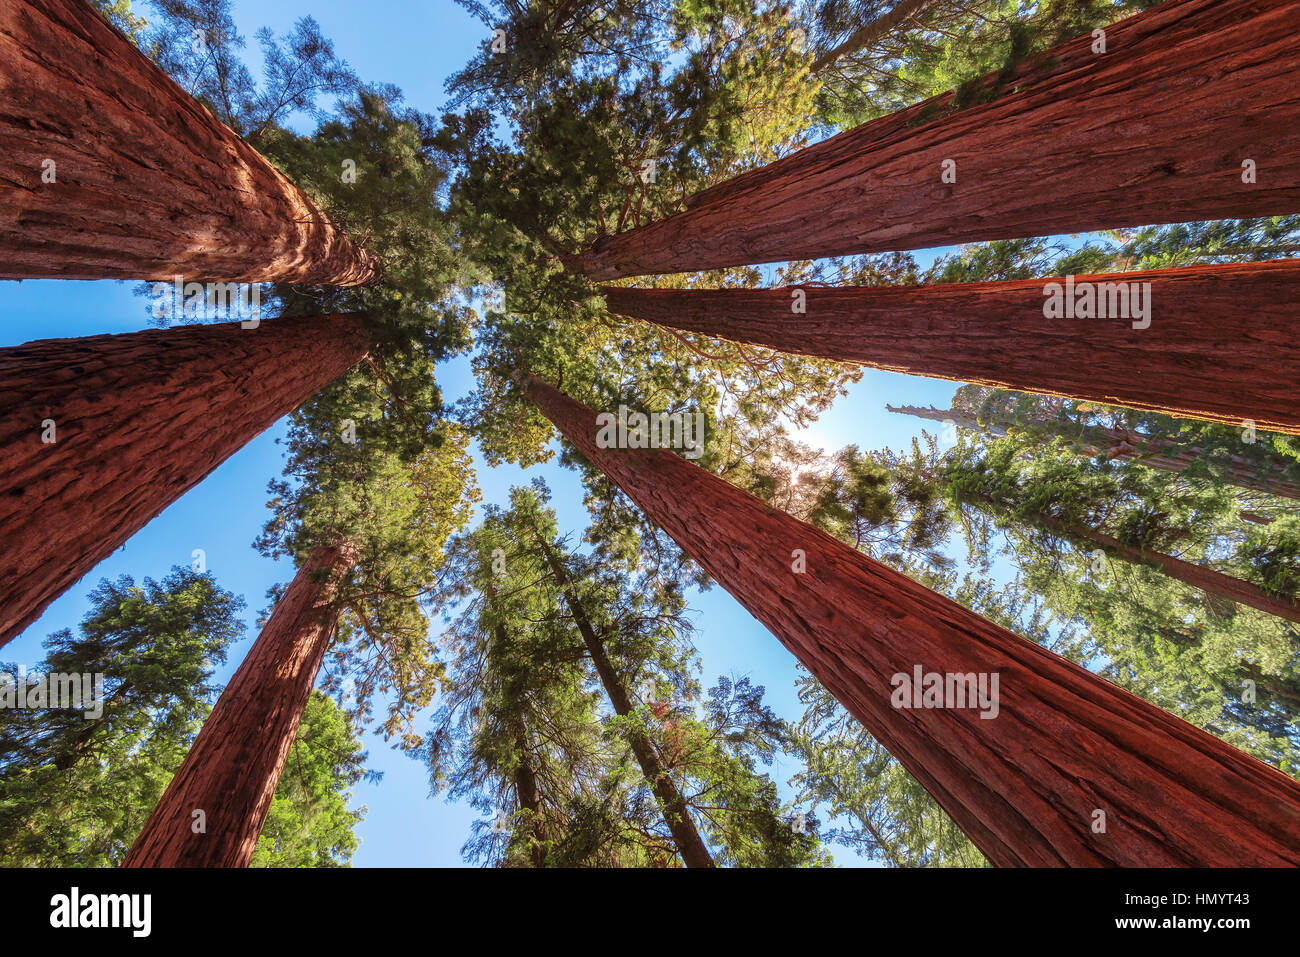 Giant Sequoia in Sequoia National Park. Stock Photo